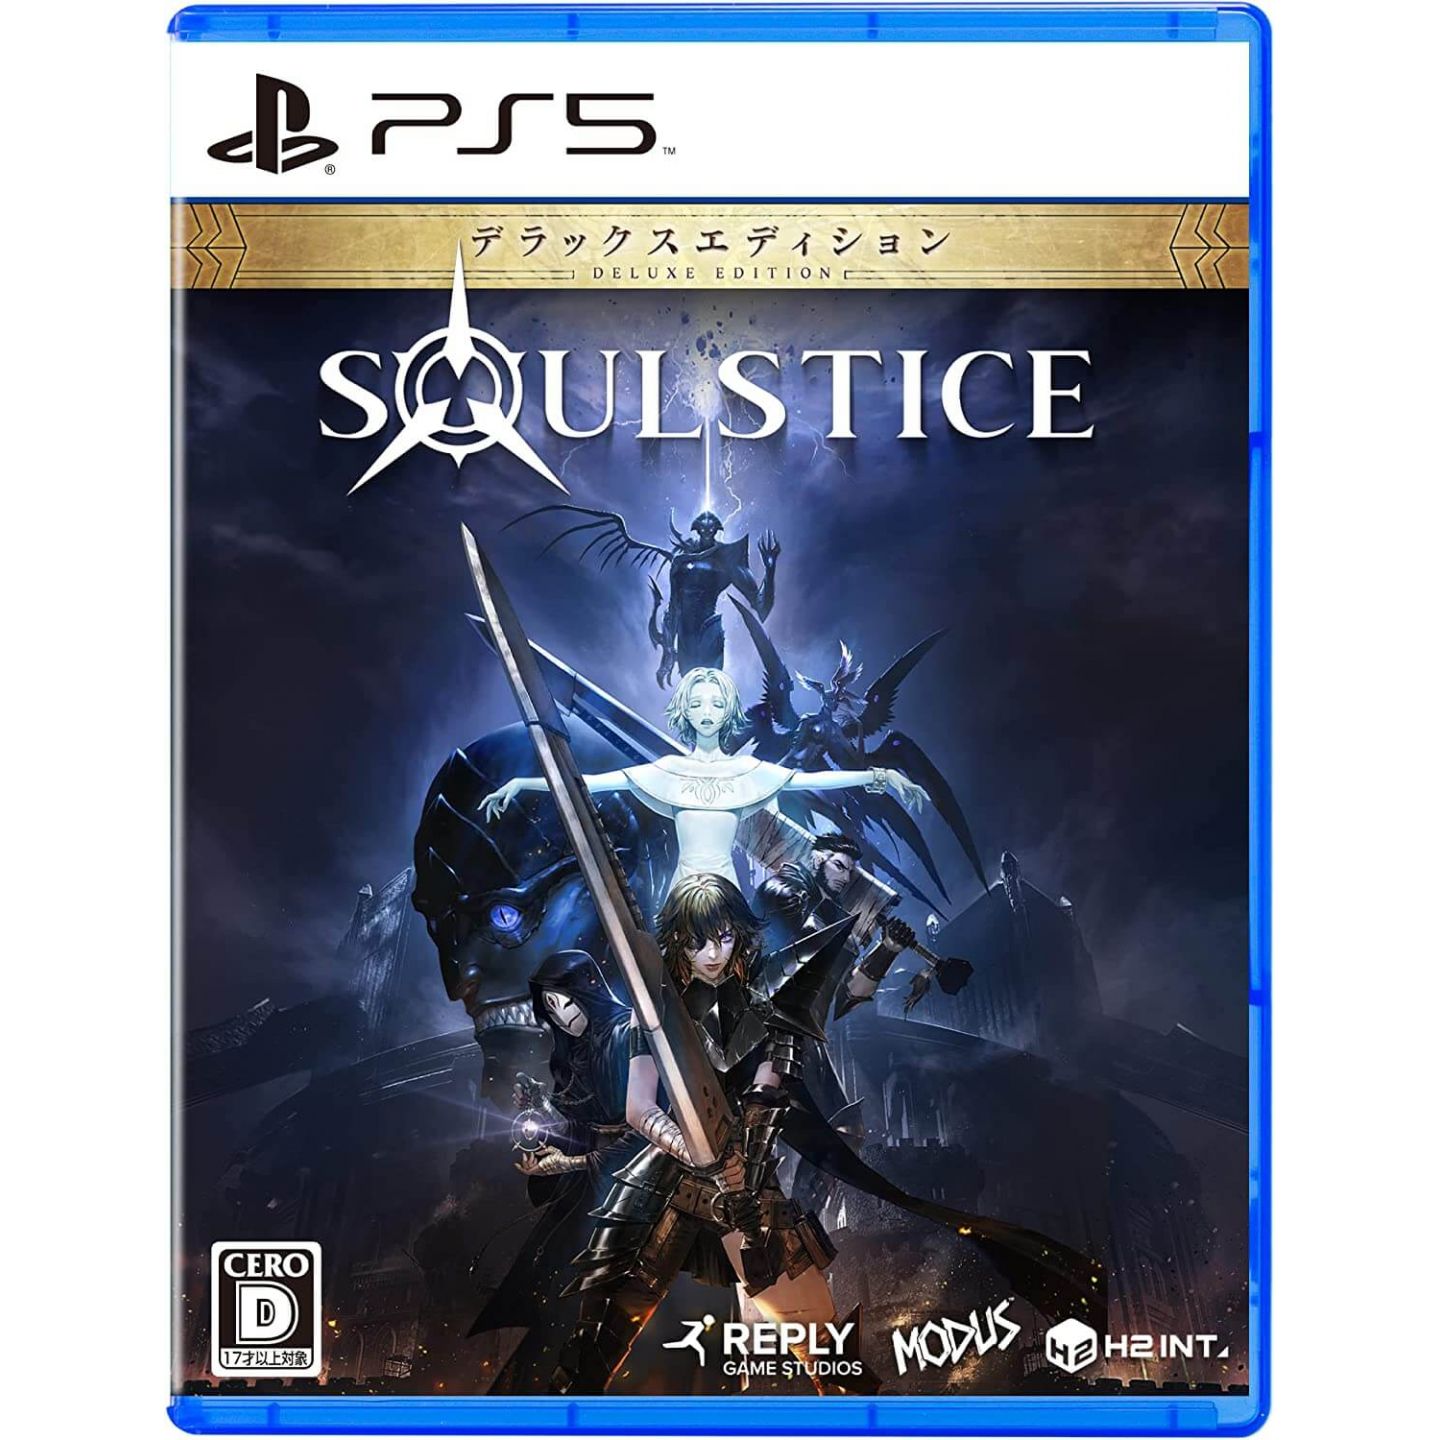 That new “Soulstice” game looks familiar… : r/Berserk